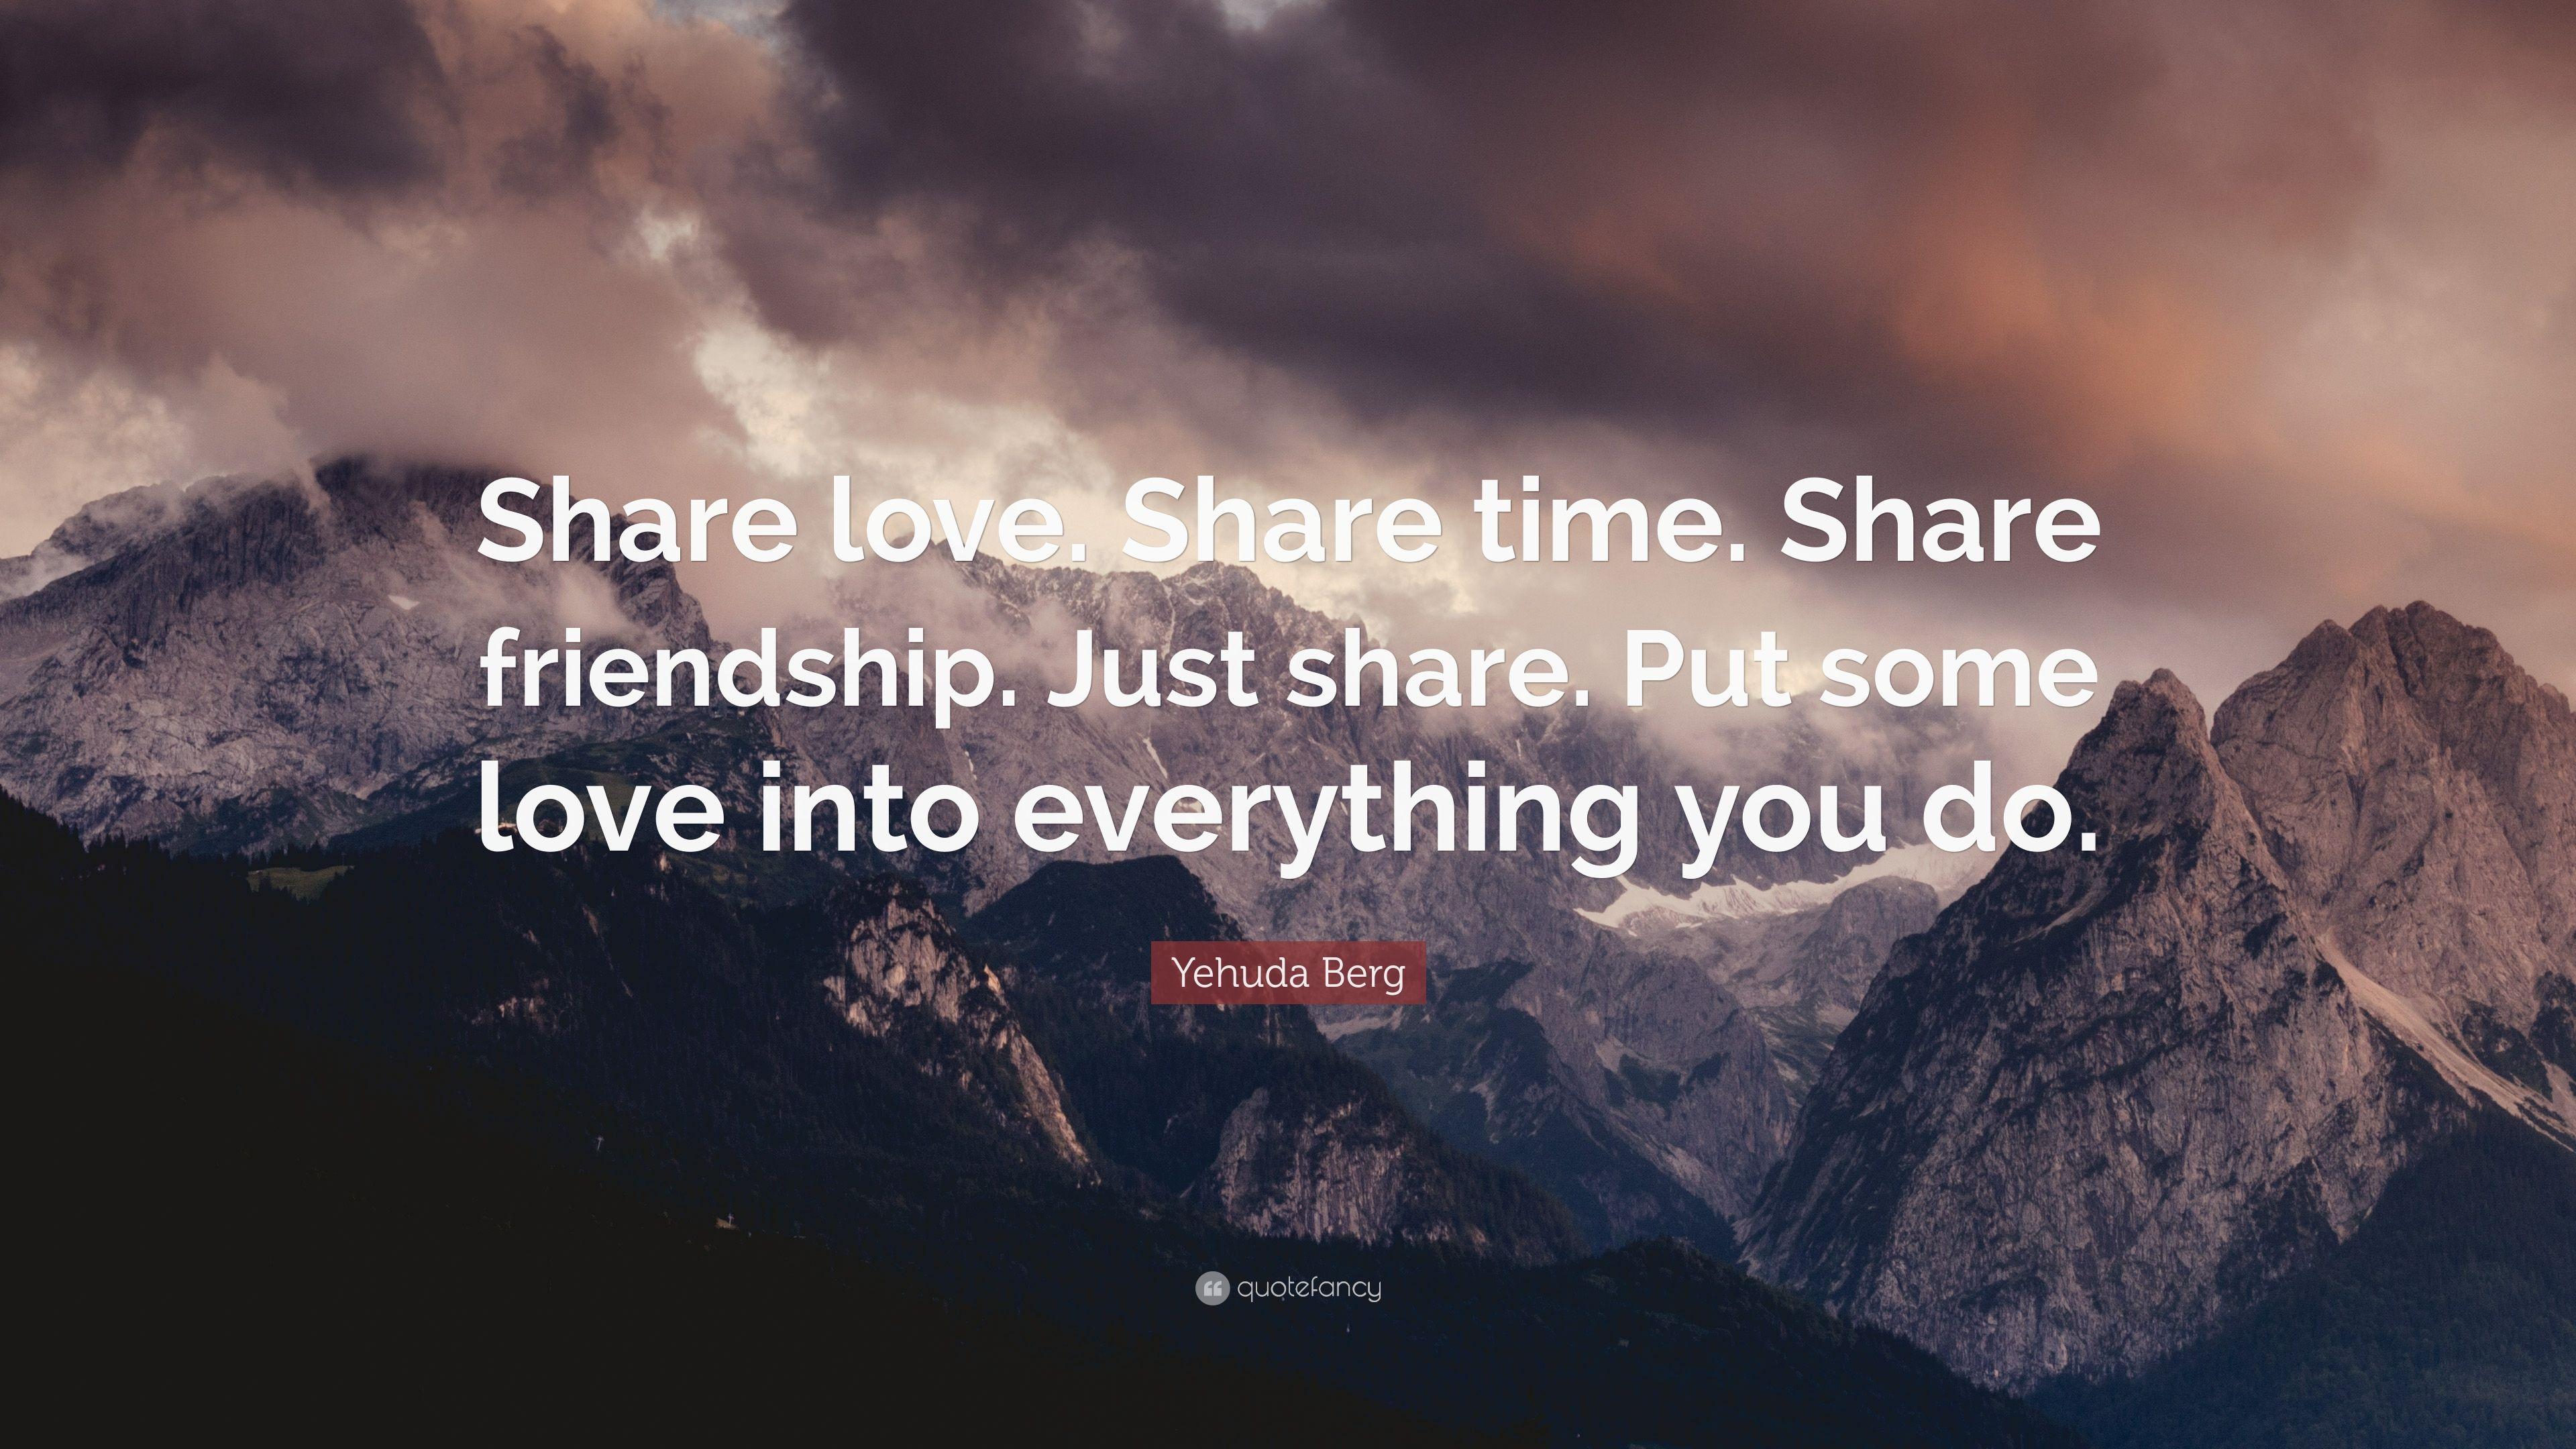 Yehuda Berg Quote: “Share love. Share time. Share friendship